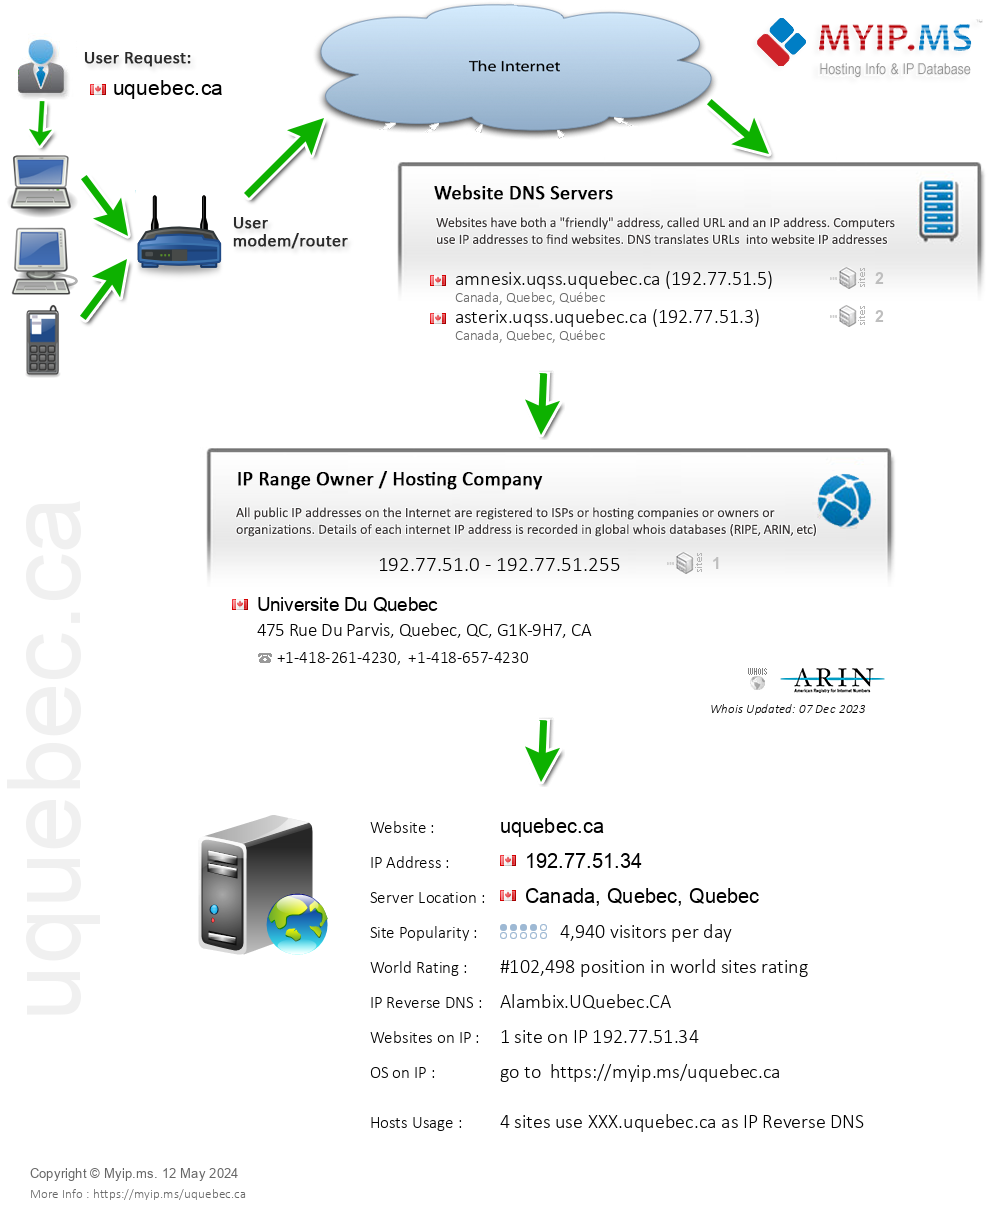 Uquebec.ca - Website Hosting Visual IP Diagram